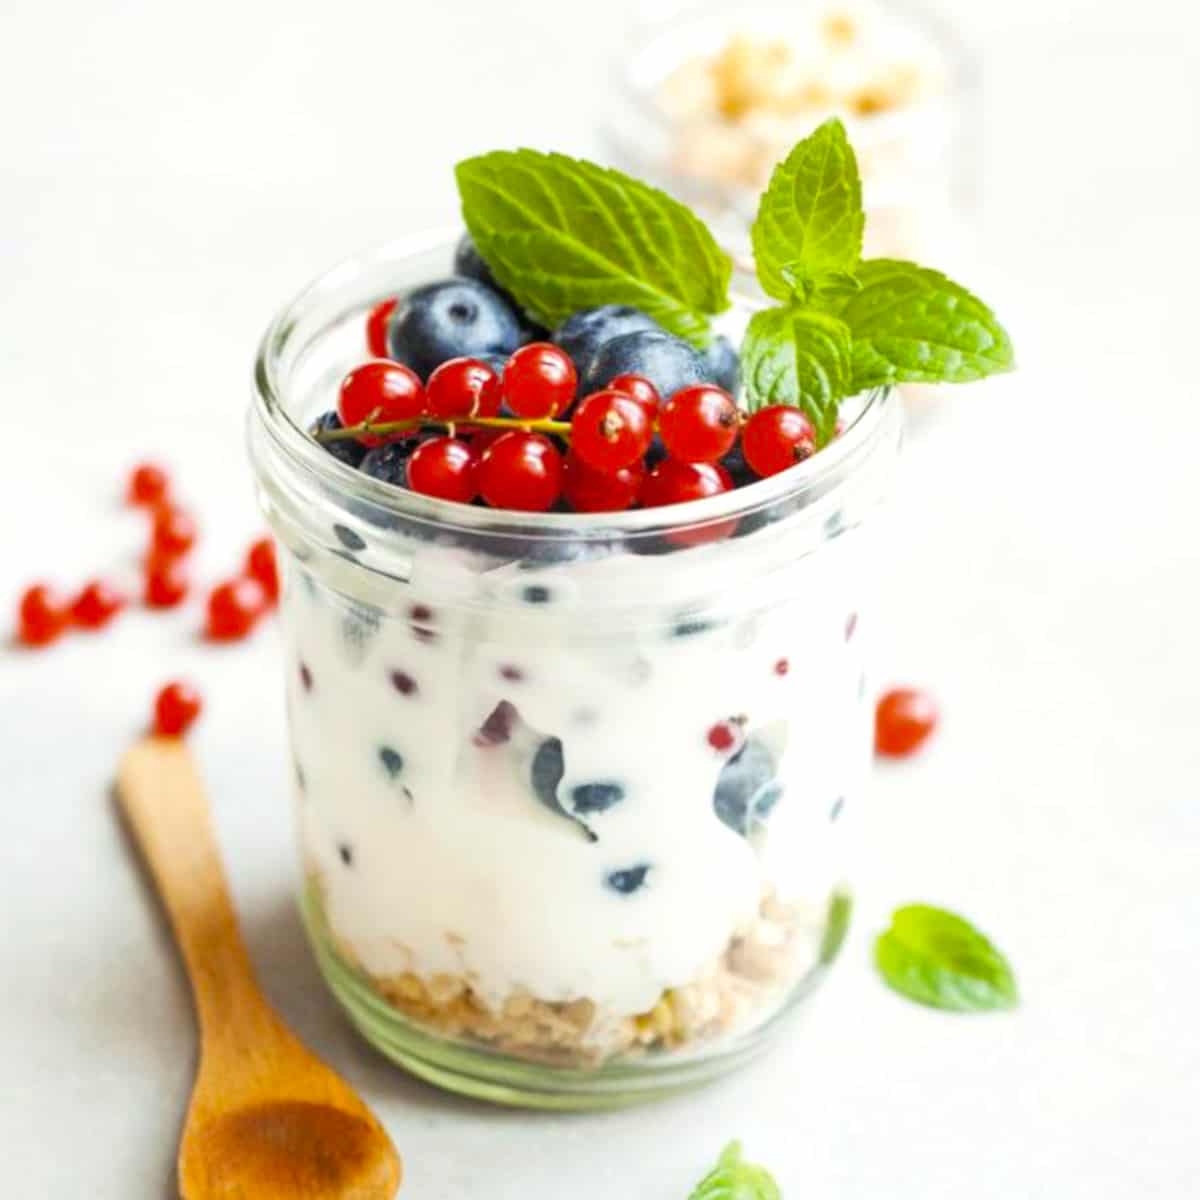 probiotic-rich yogurt parfait with berries and granola 